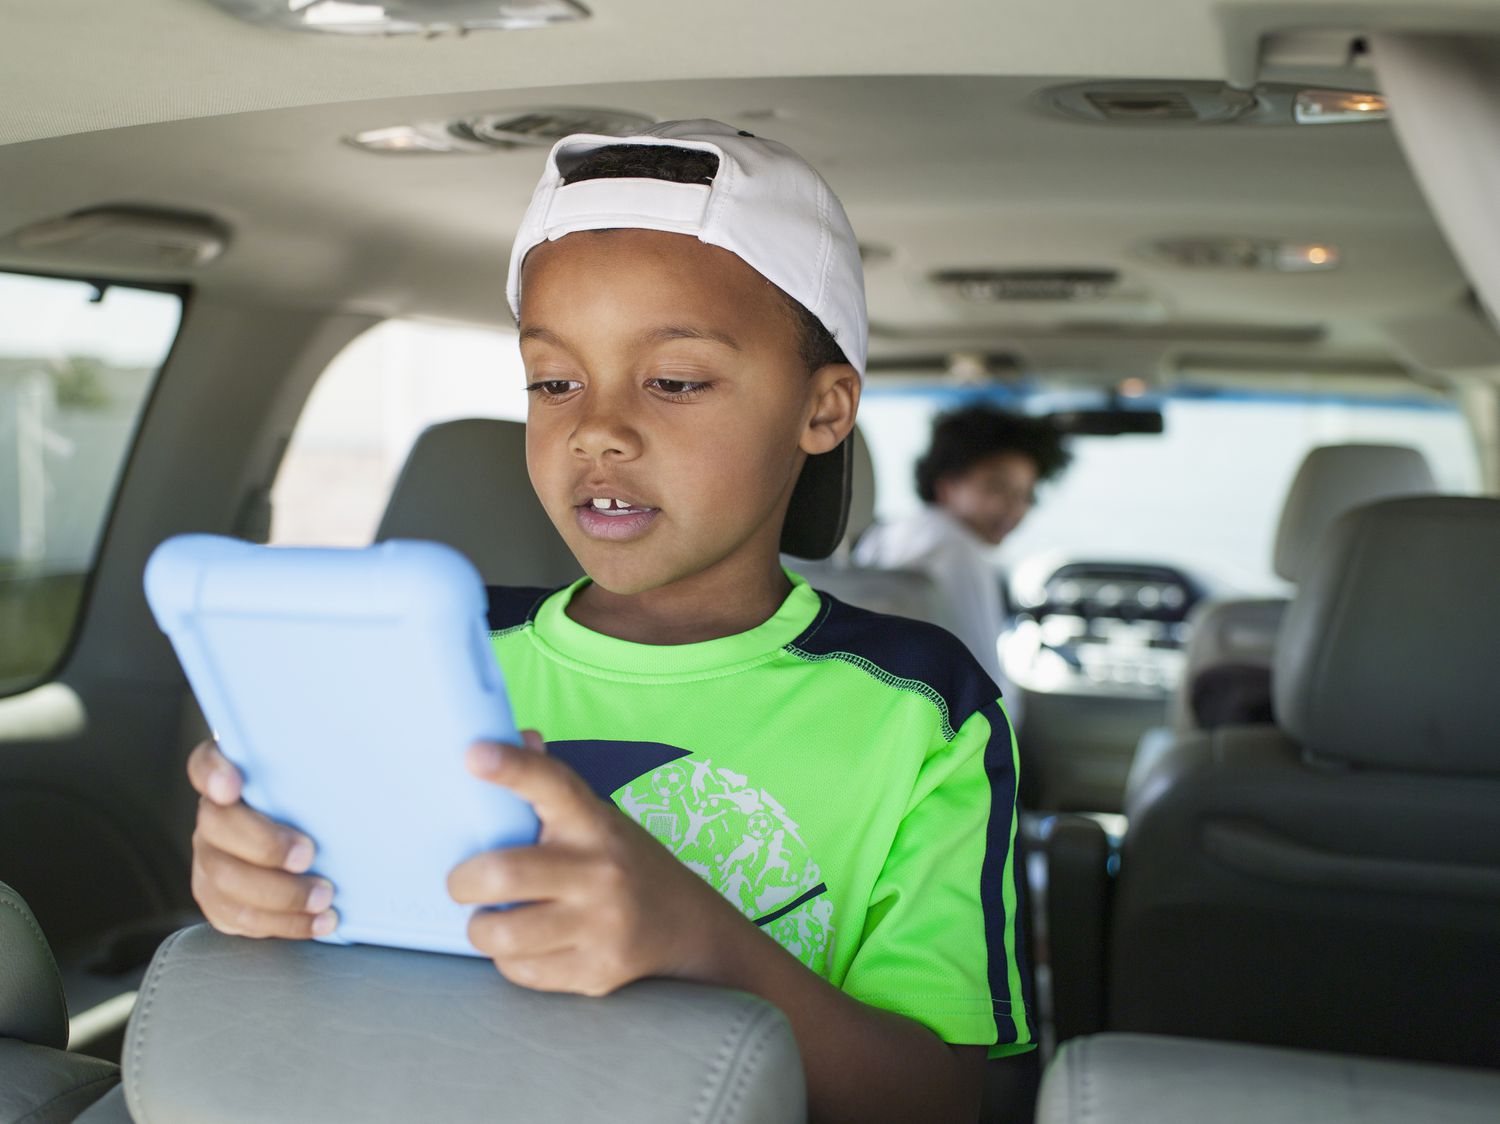 boy with tablet in minivan teenaged sister driving 580521807 5b9d510b46e0fb0024515512